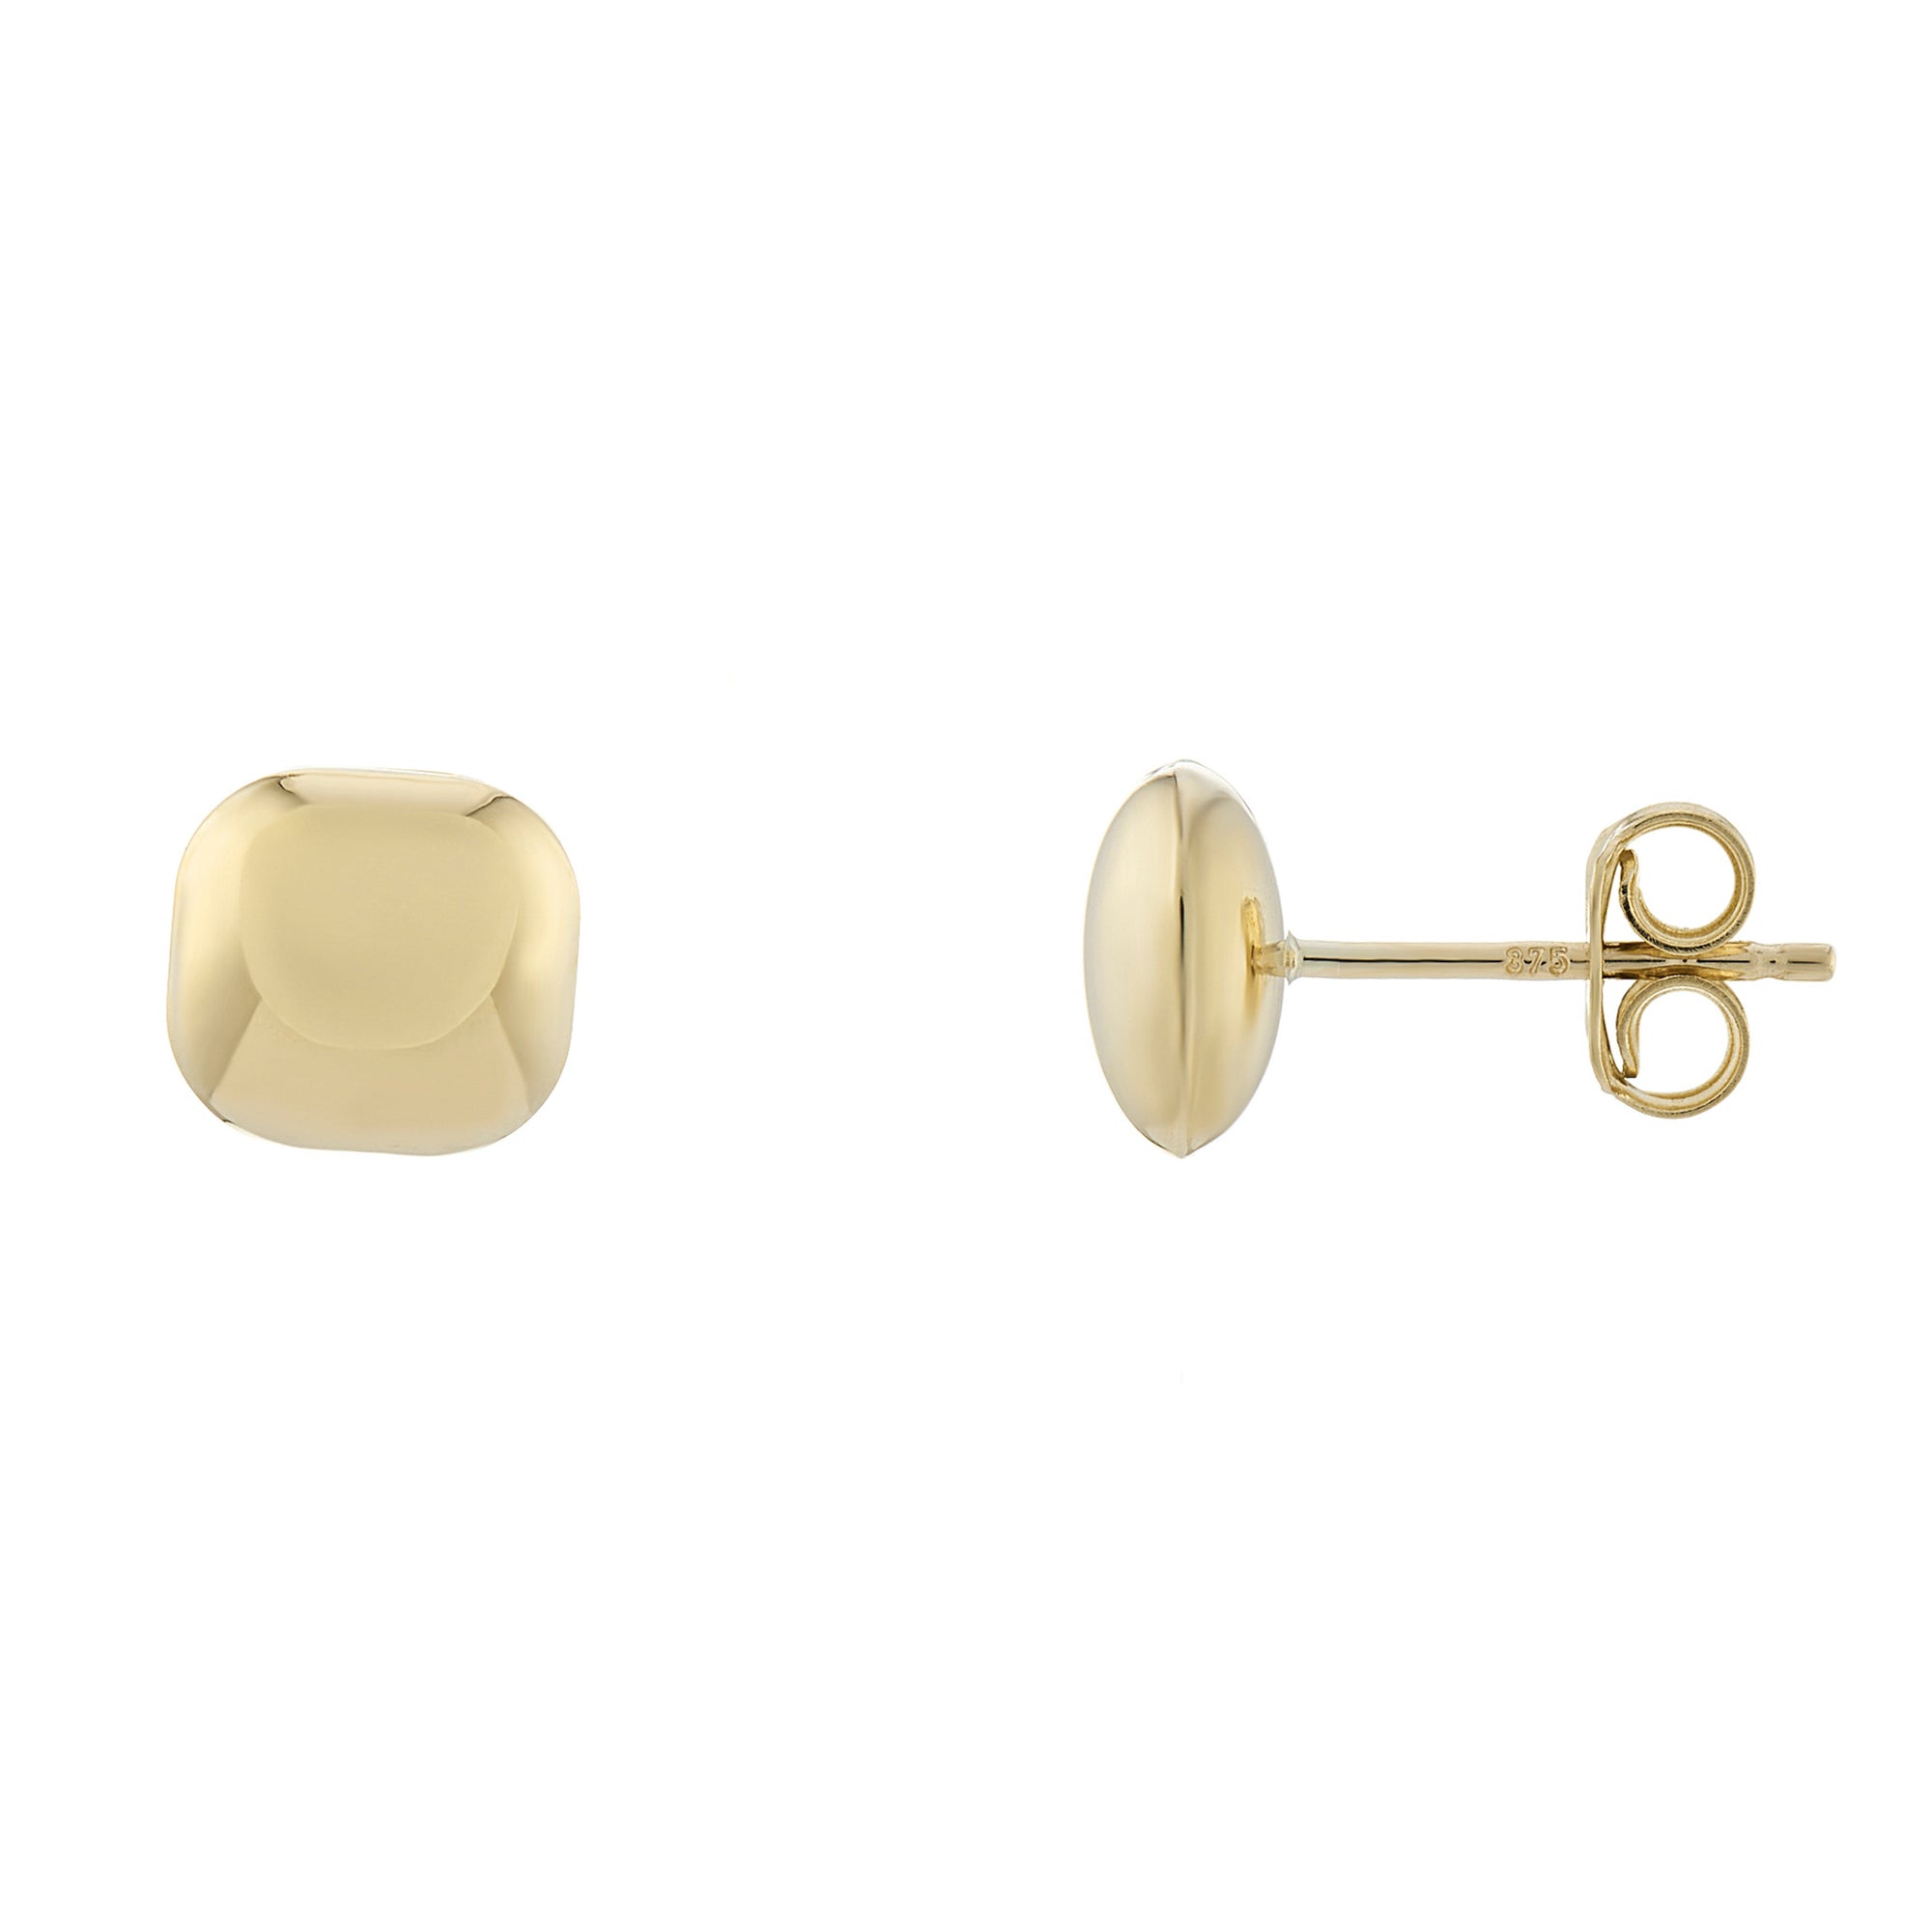 9ct gold 8mm plain cushion shape stud earrings